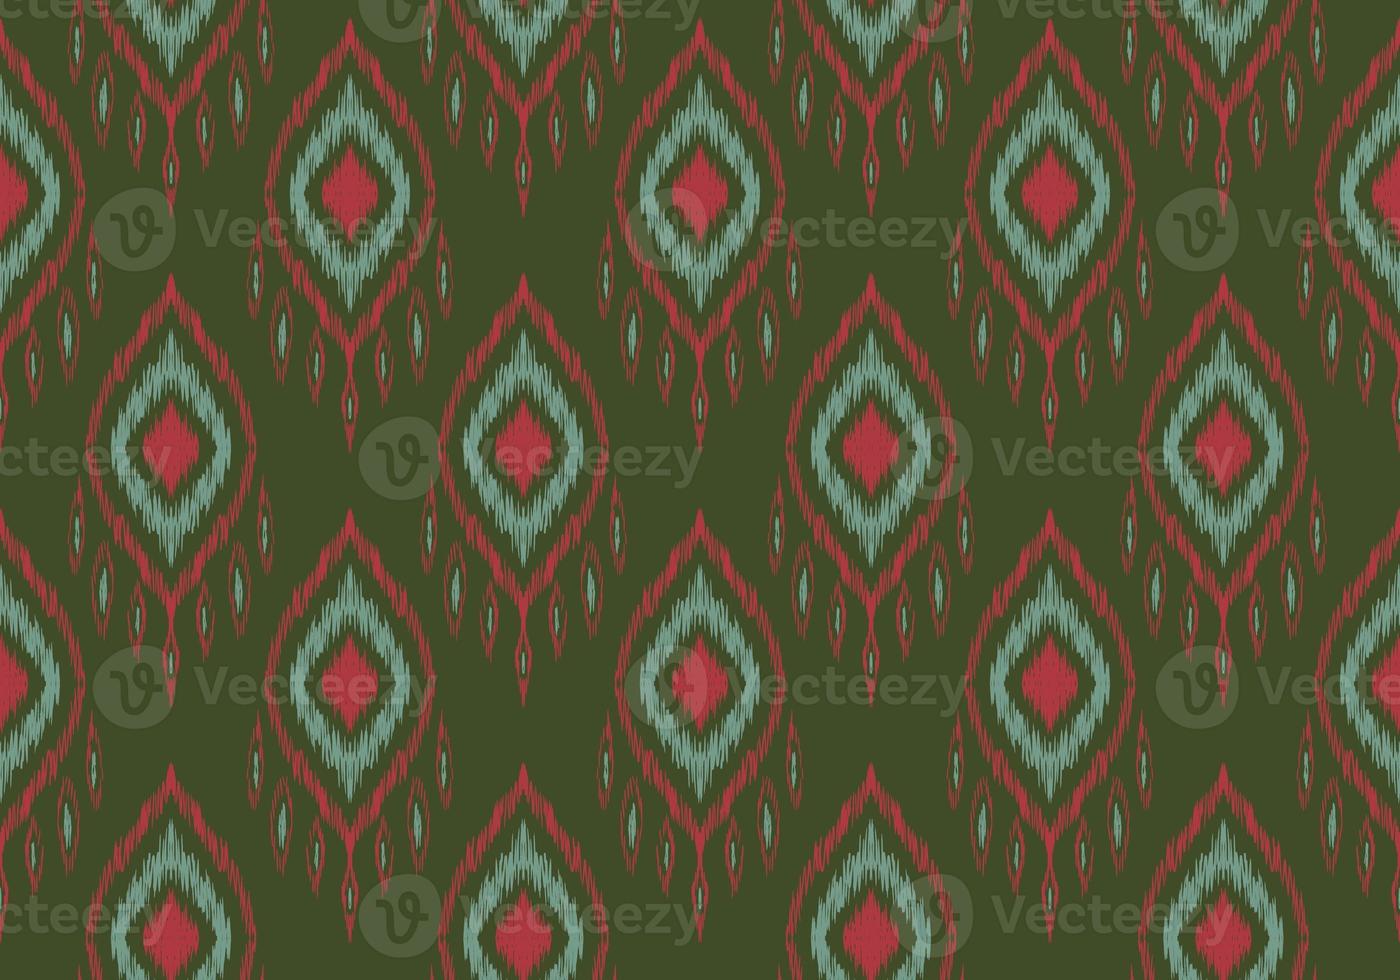 Ikat Pattern Ethnic Geometric native tribal boho motif aztec textile fabric carpet mandalas African American background backdrop illustrations tile paper flower texture fabric ceramic wallpaper photo